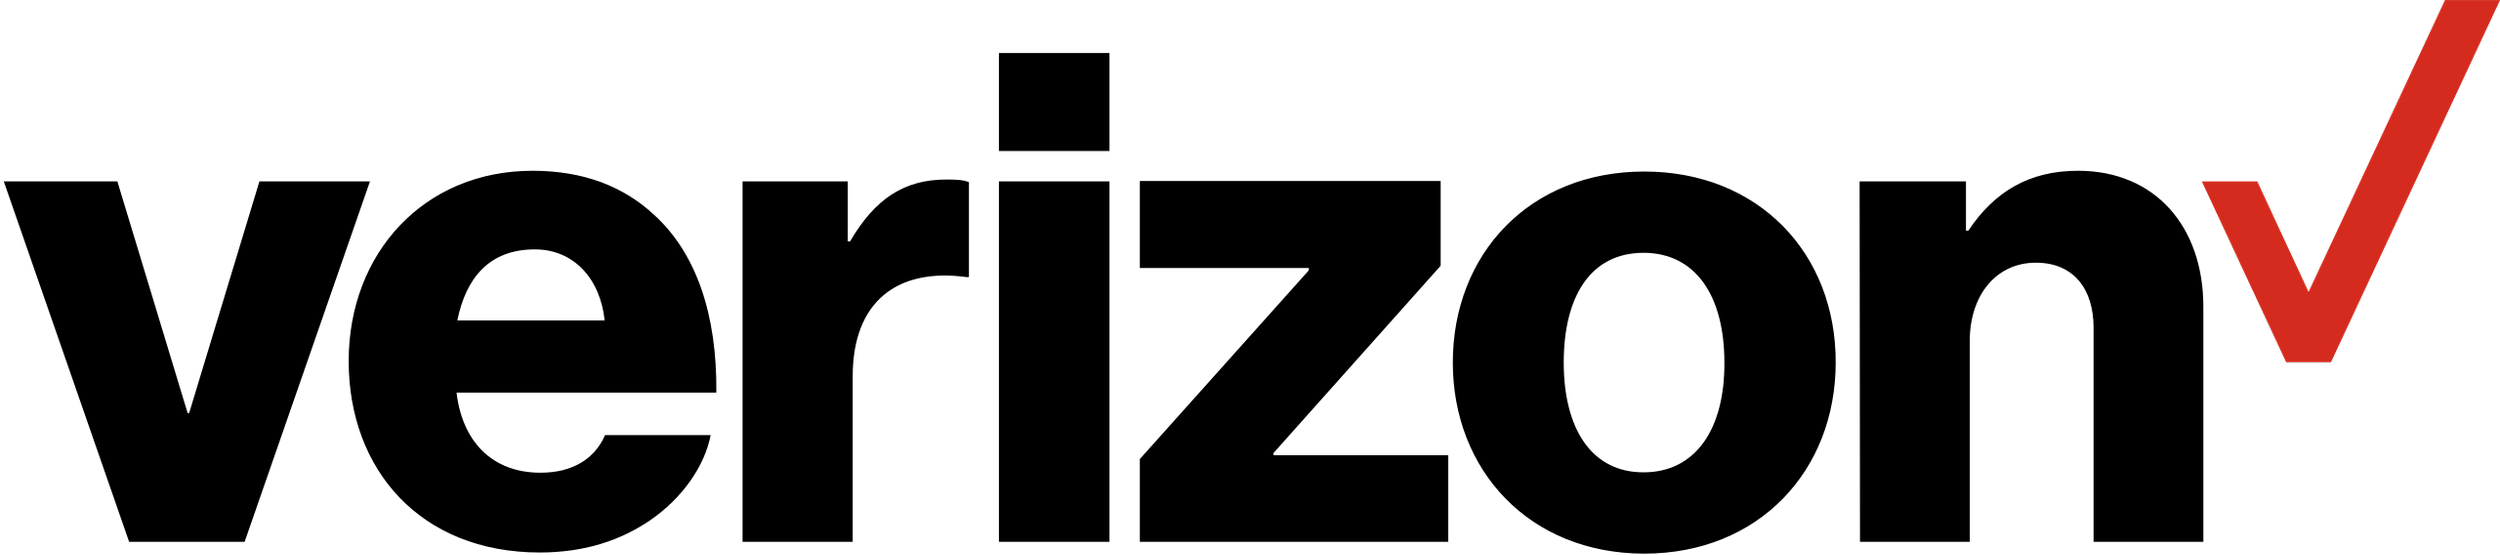 Verizon_2015_logo_-vector.svg.png